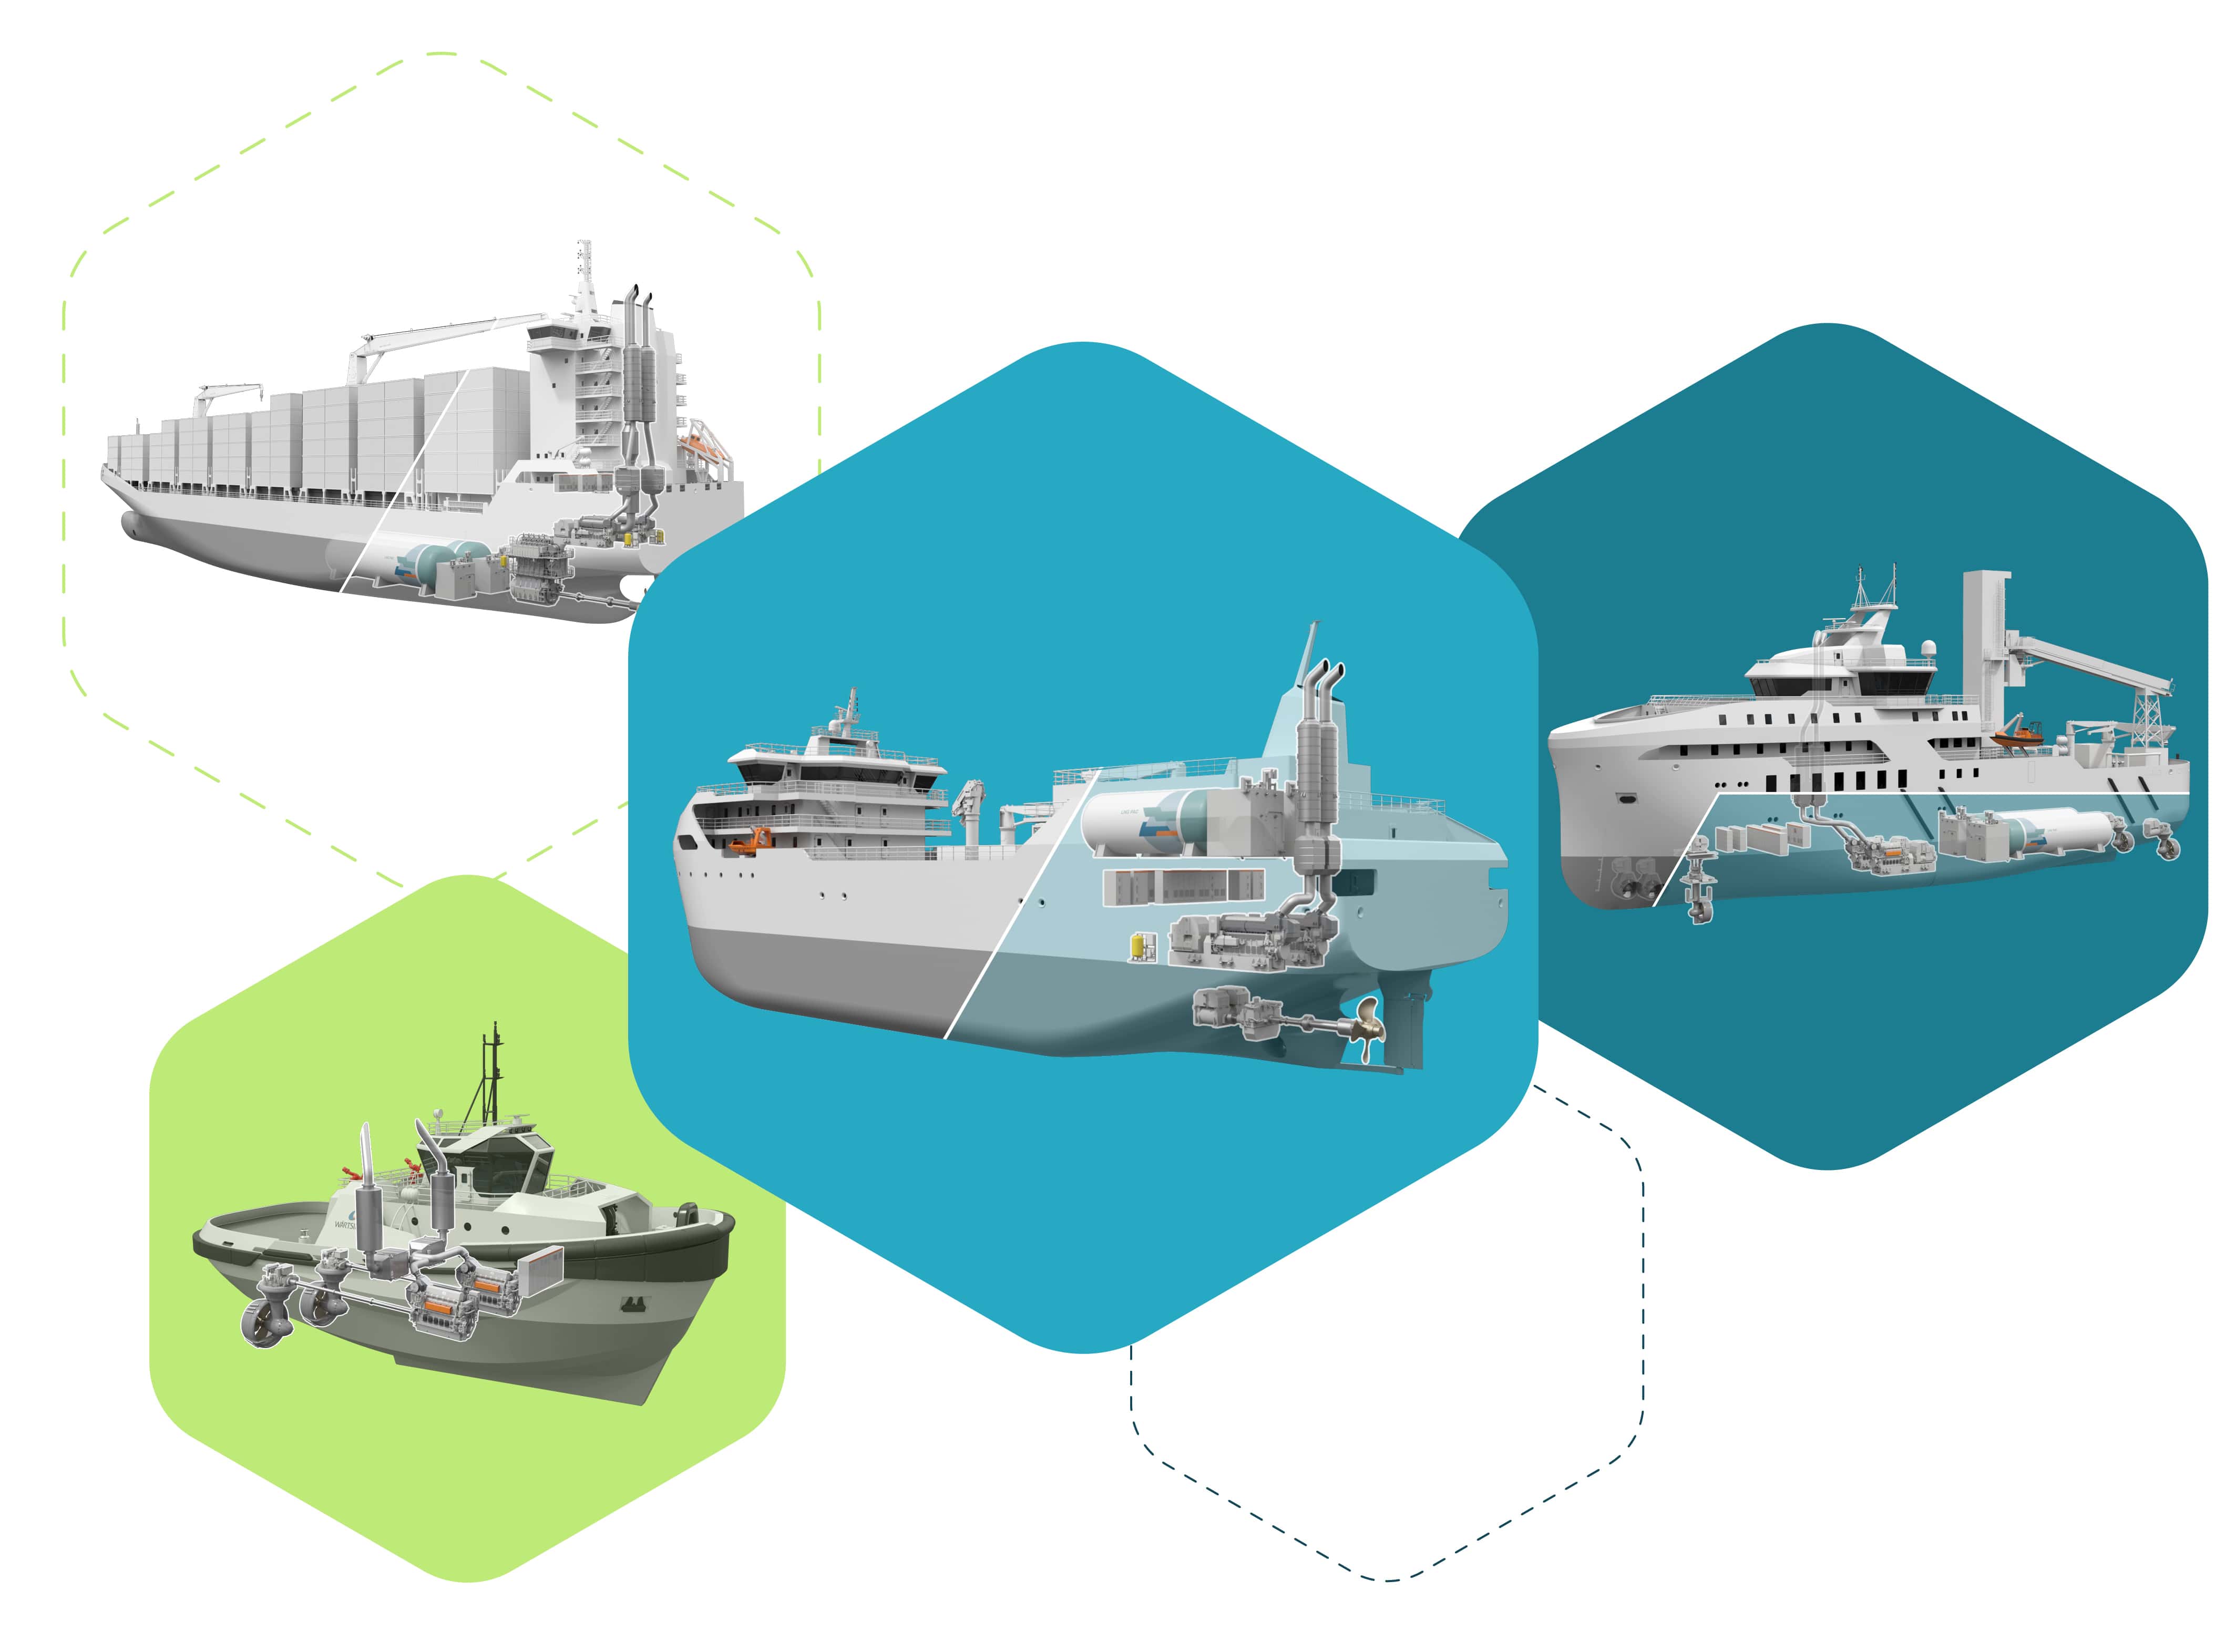 Wärtsilä Ship Design enables unique capabilities for new factory